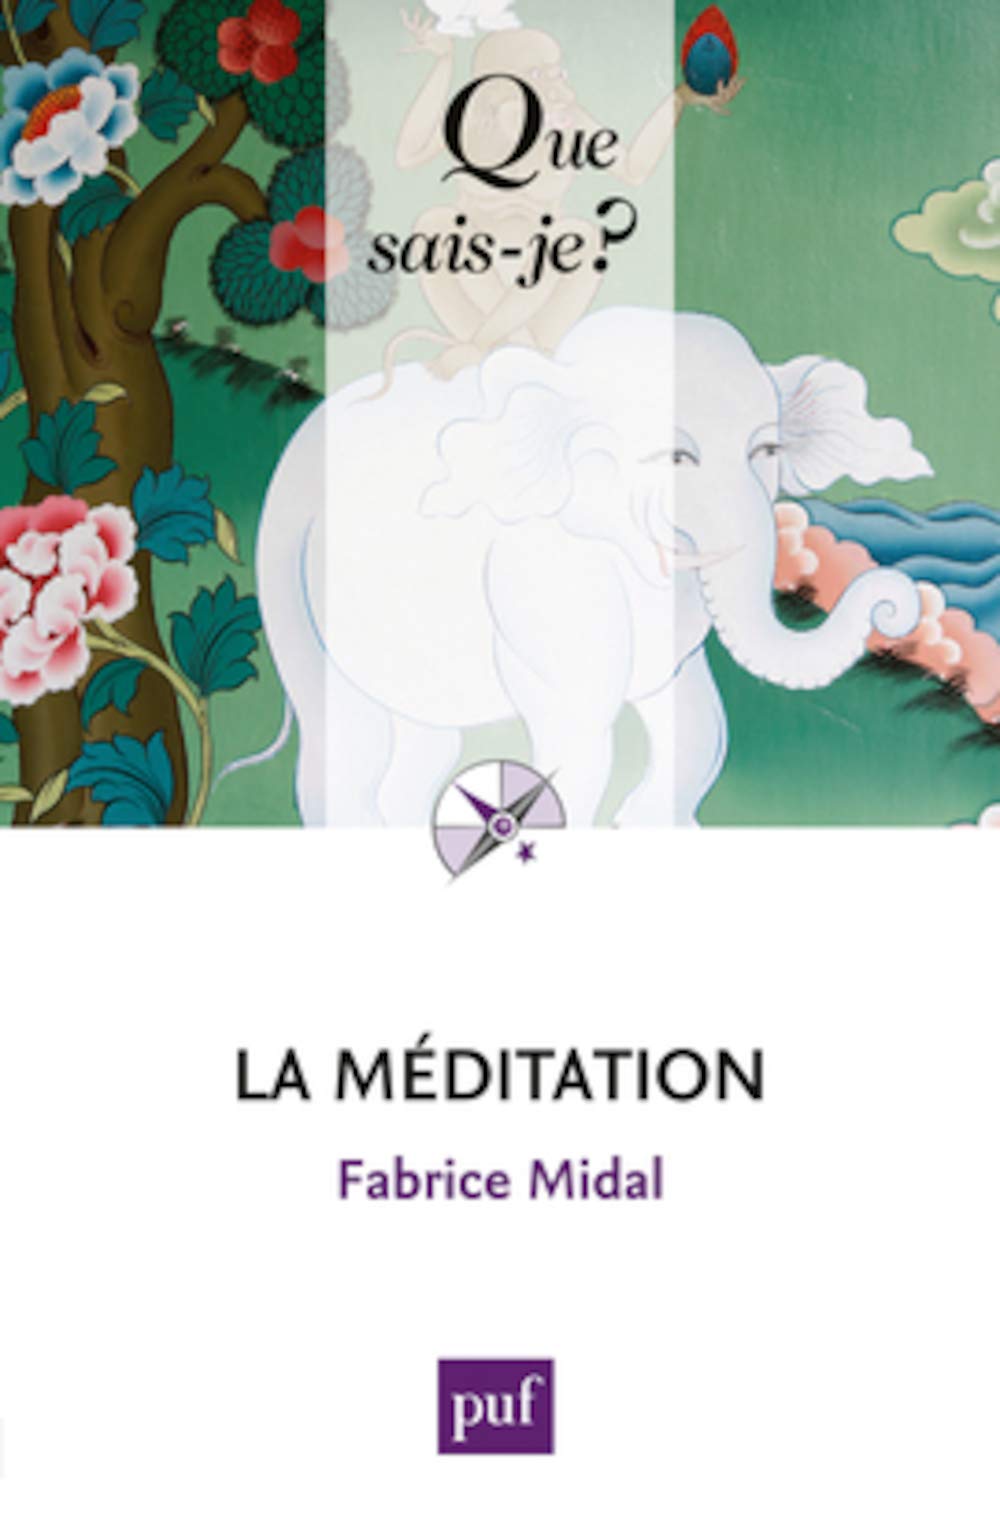 La méditation - Fabrice Midal (Que sais-je?)